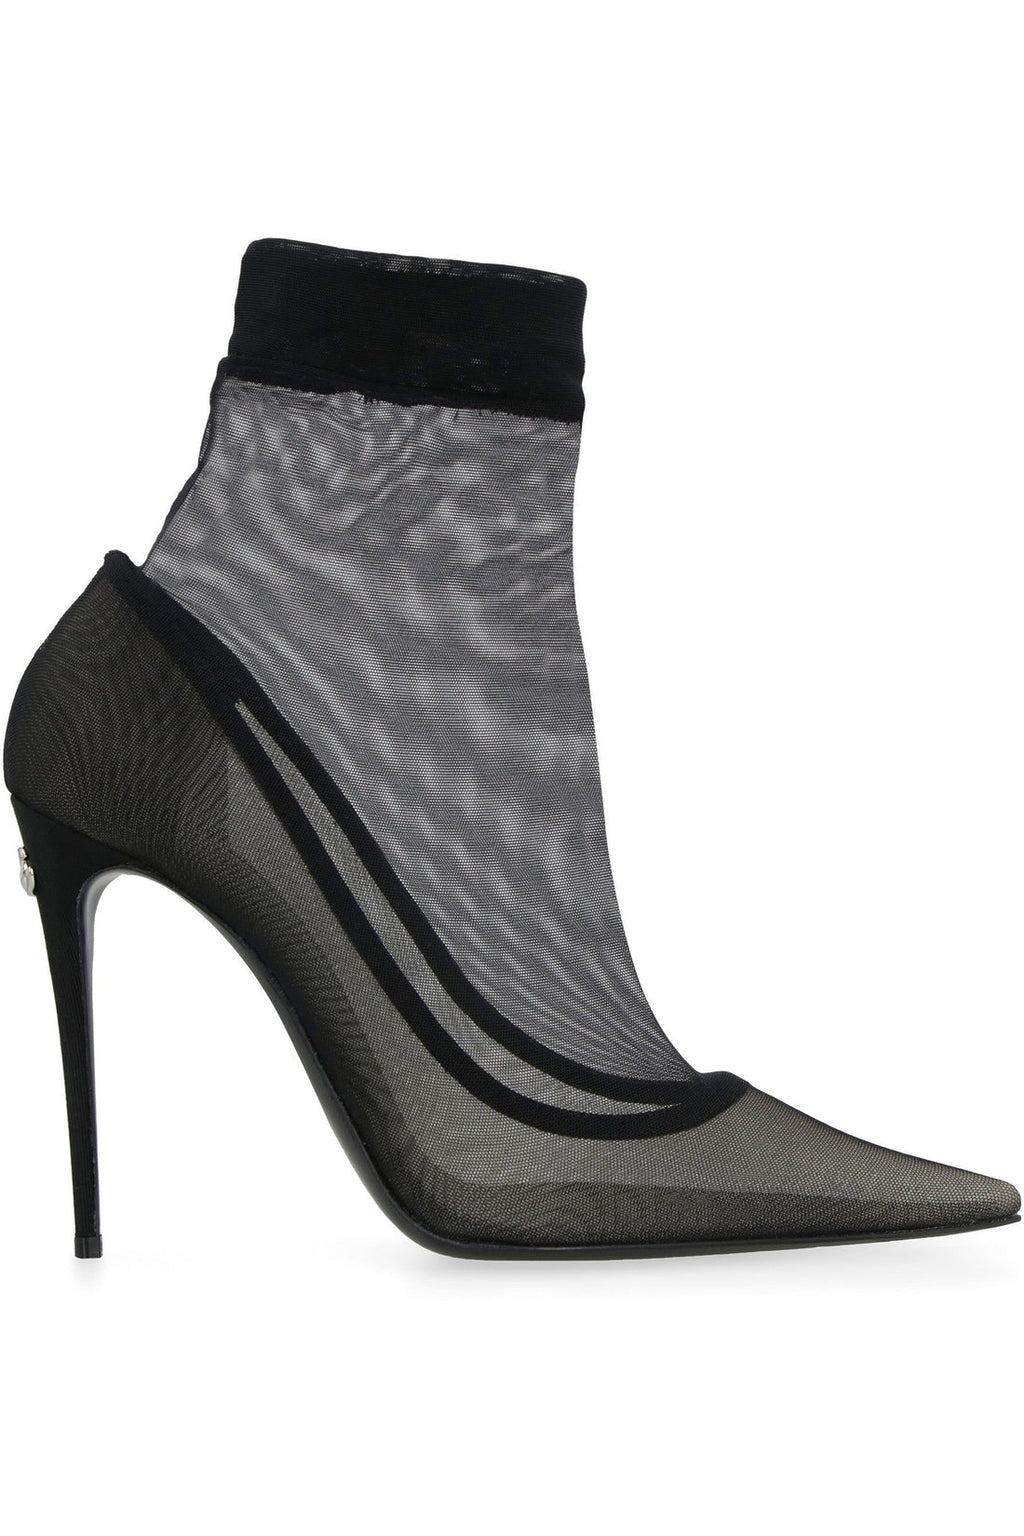 Dolce & Gabbana-OUTLET-SALE-KIM DOLCE&GABBANA - Sock ankle boots-ARCHIVIST